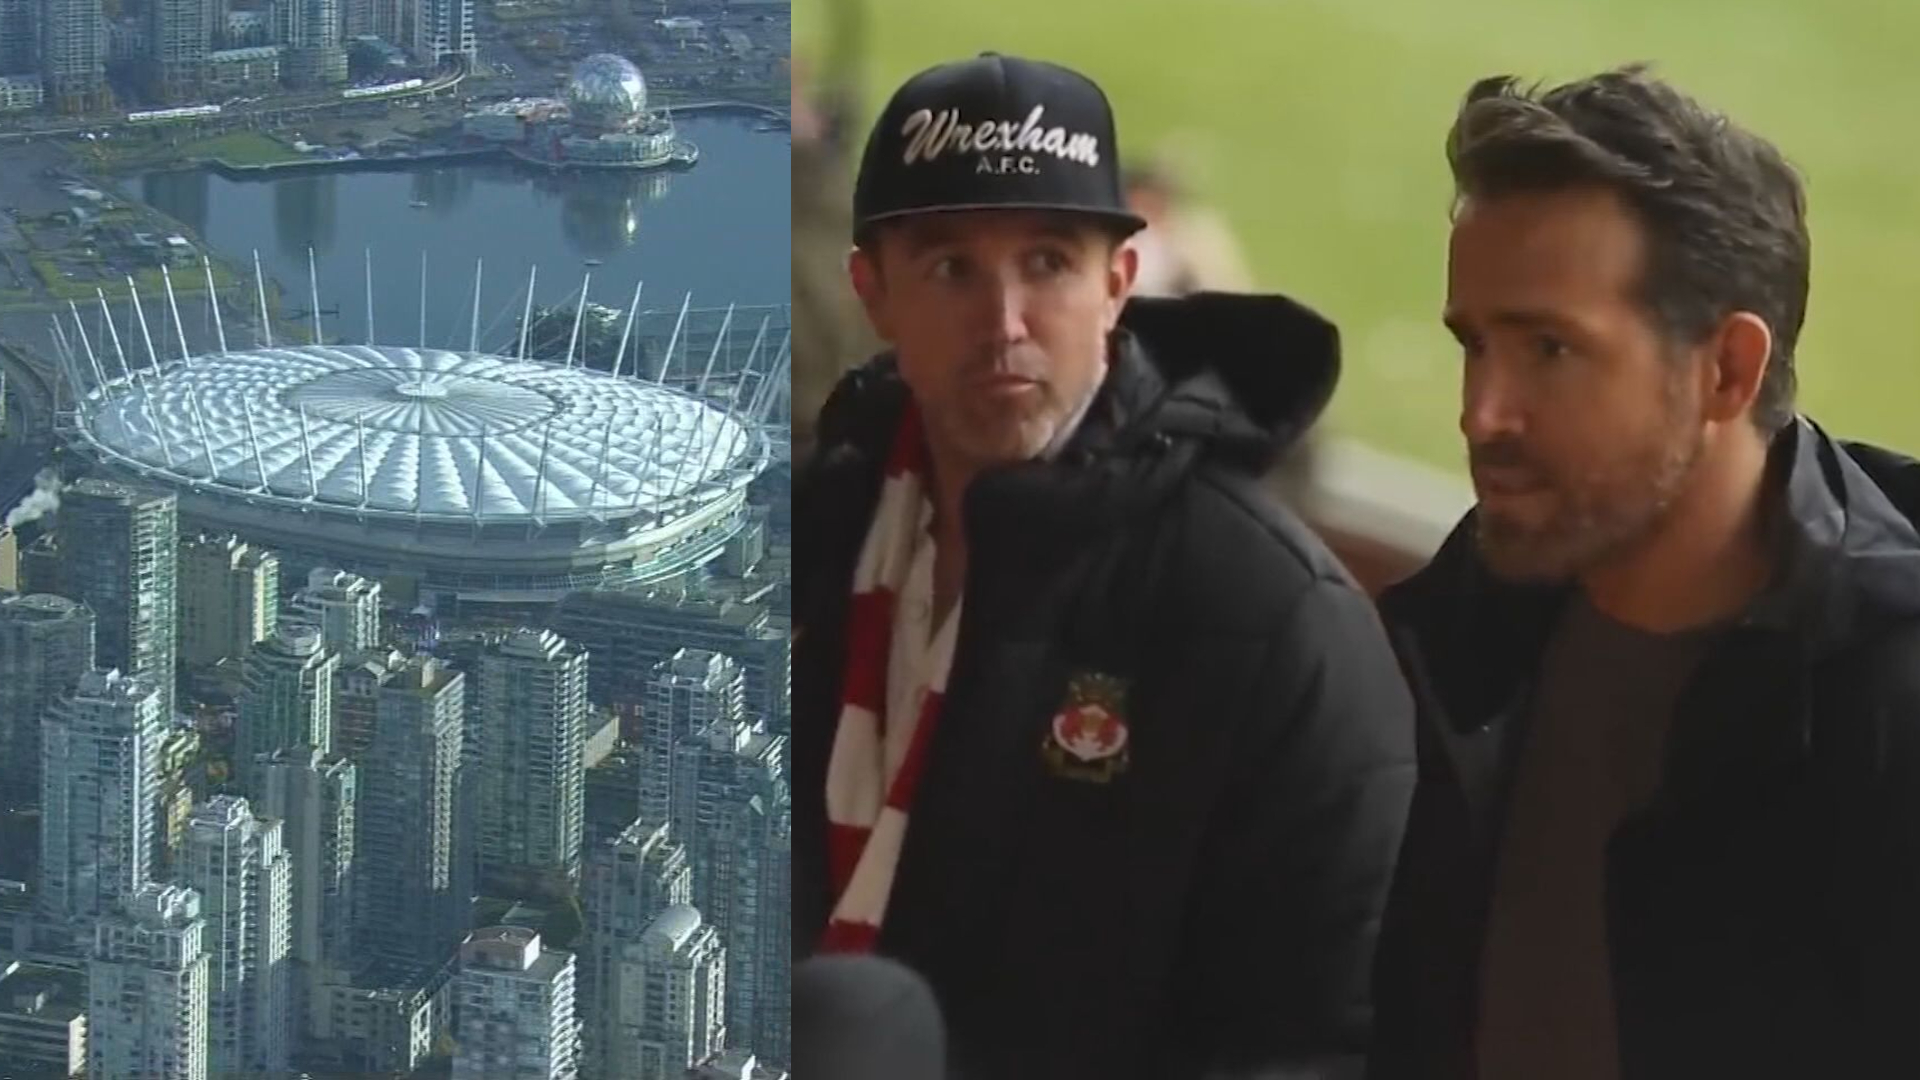 Ryan Reynolds bringing Wrexham A.F.C. to Vancouver